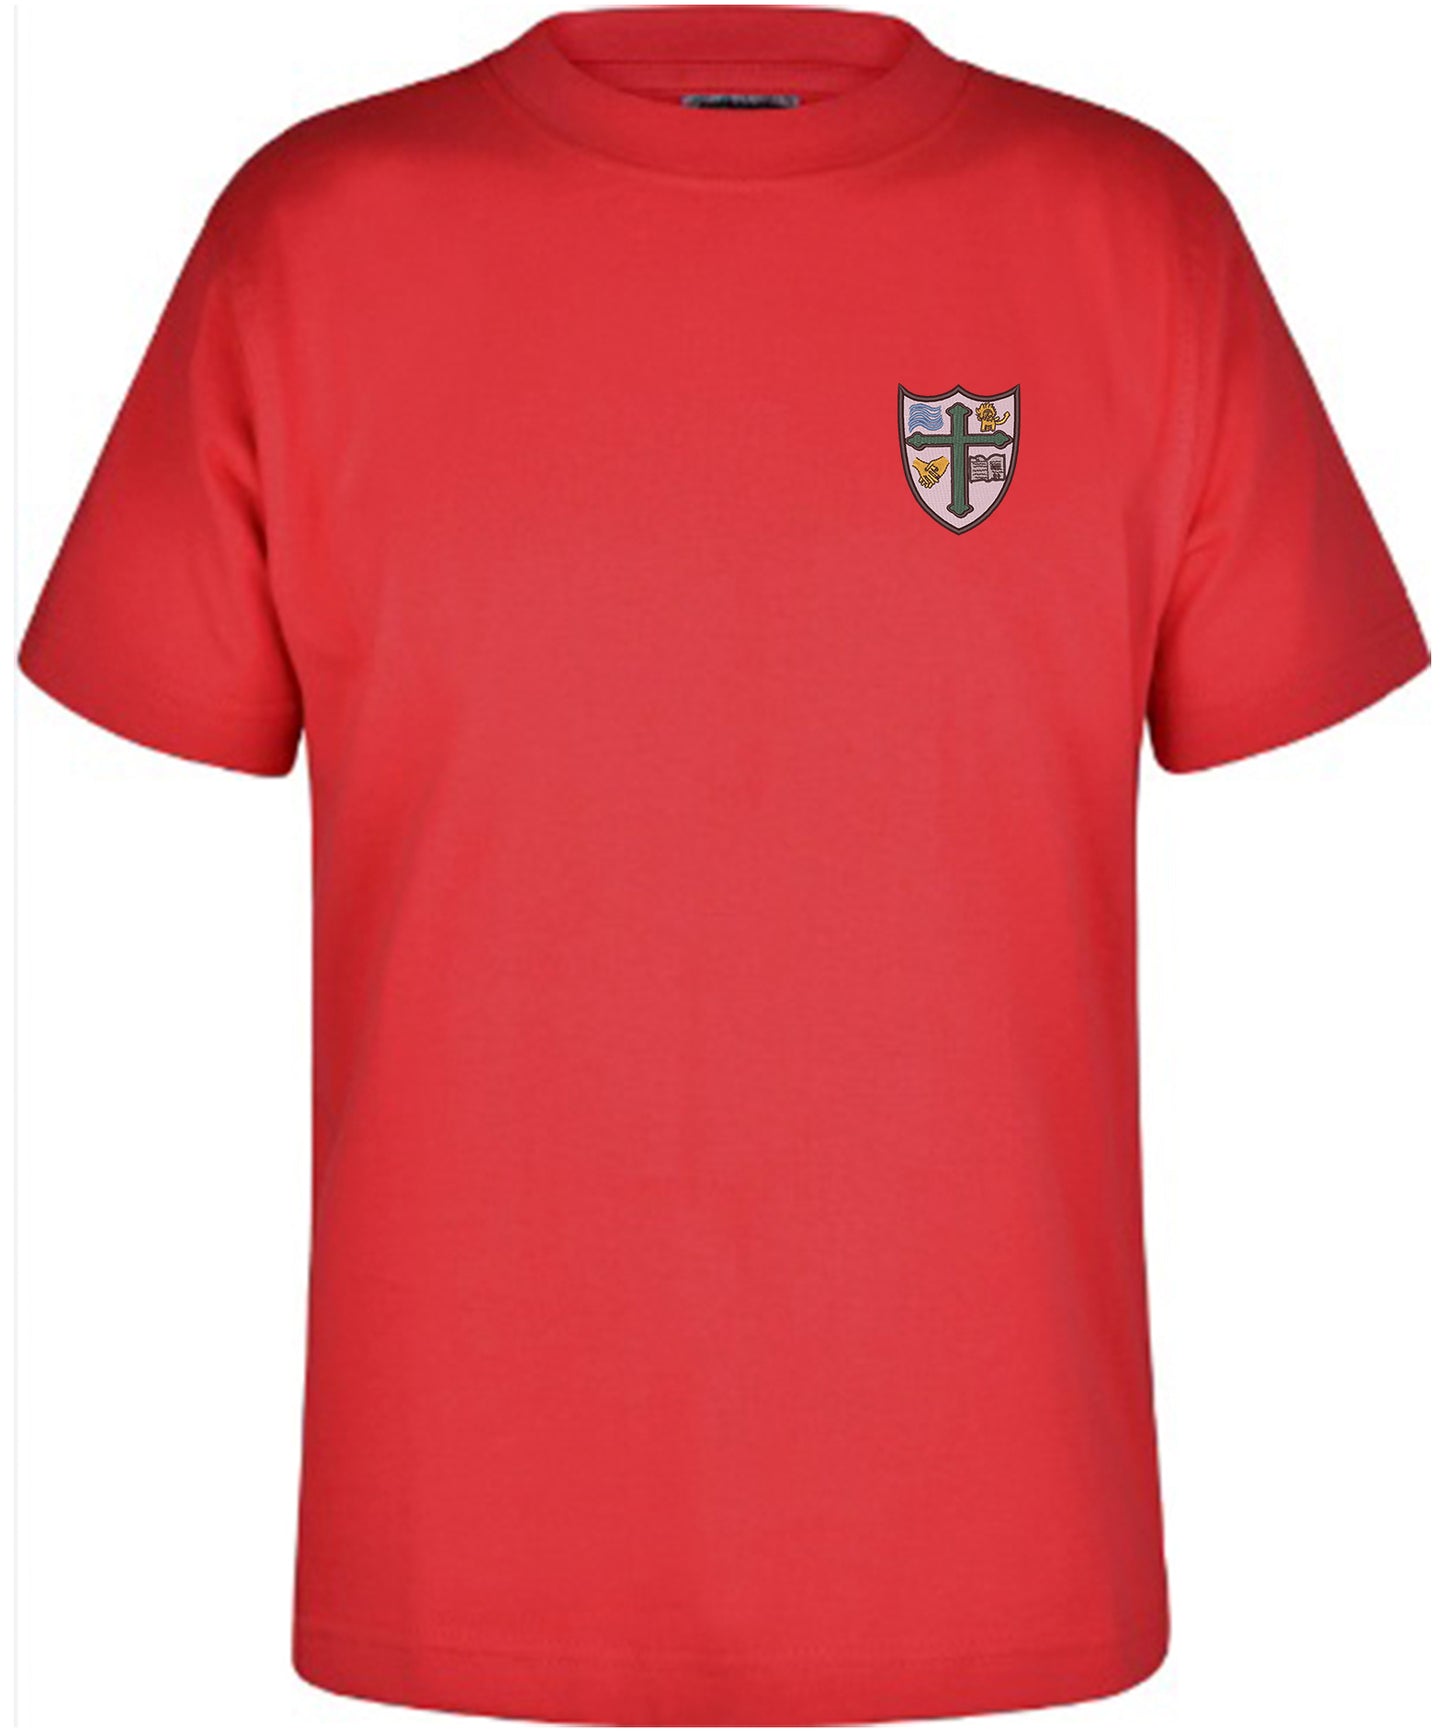 Highcliffe St Mark Primary School - Red - Unisex Cotton T-Shirt